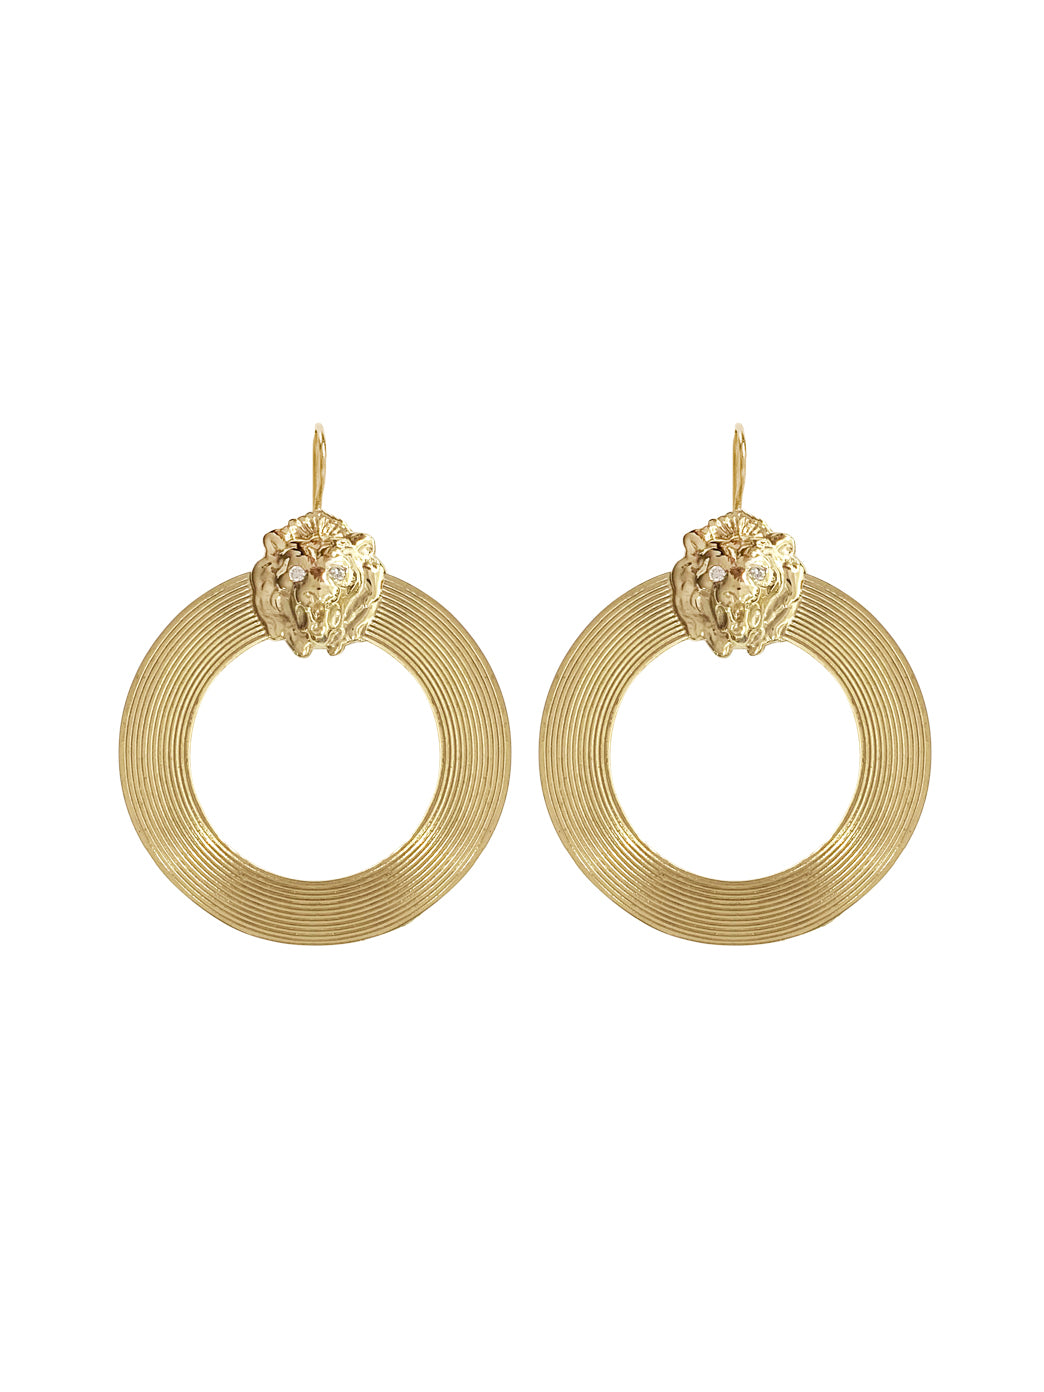 Fiorina Jewellery Gold London Earrings